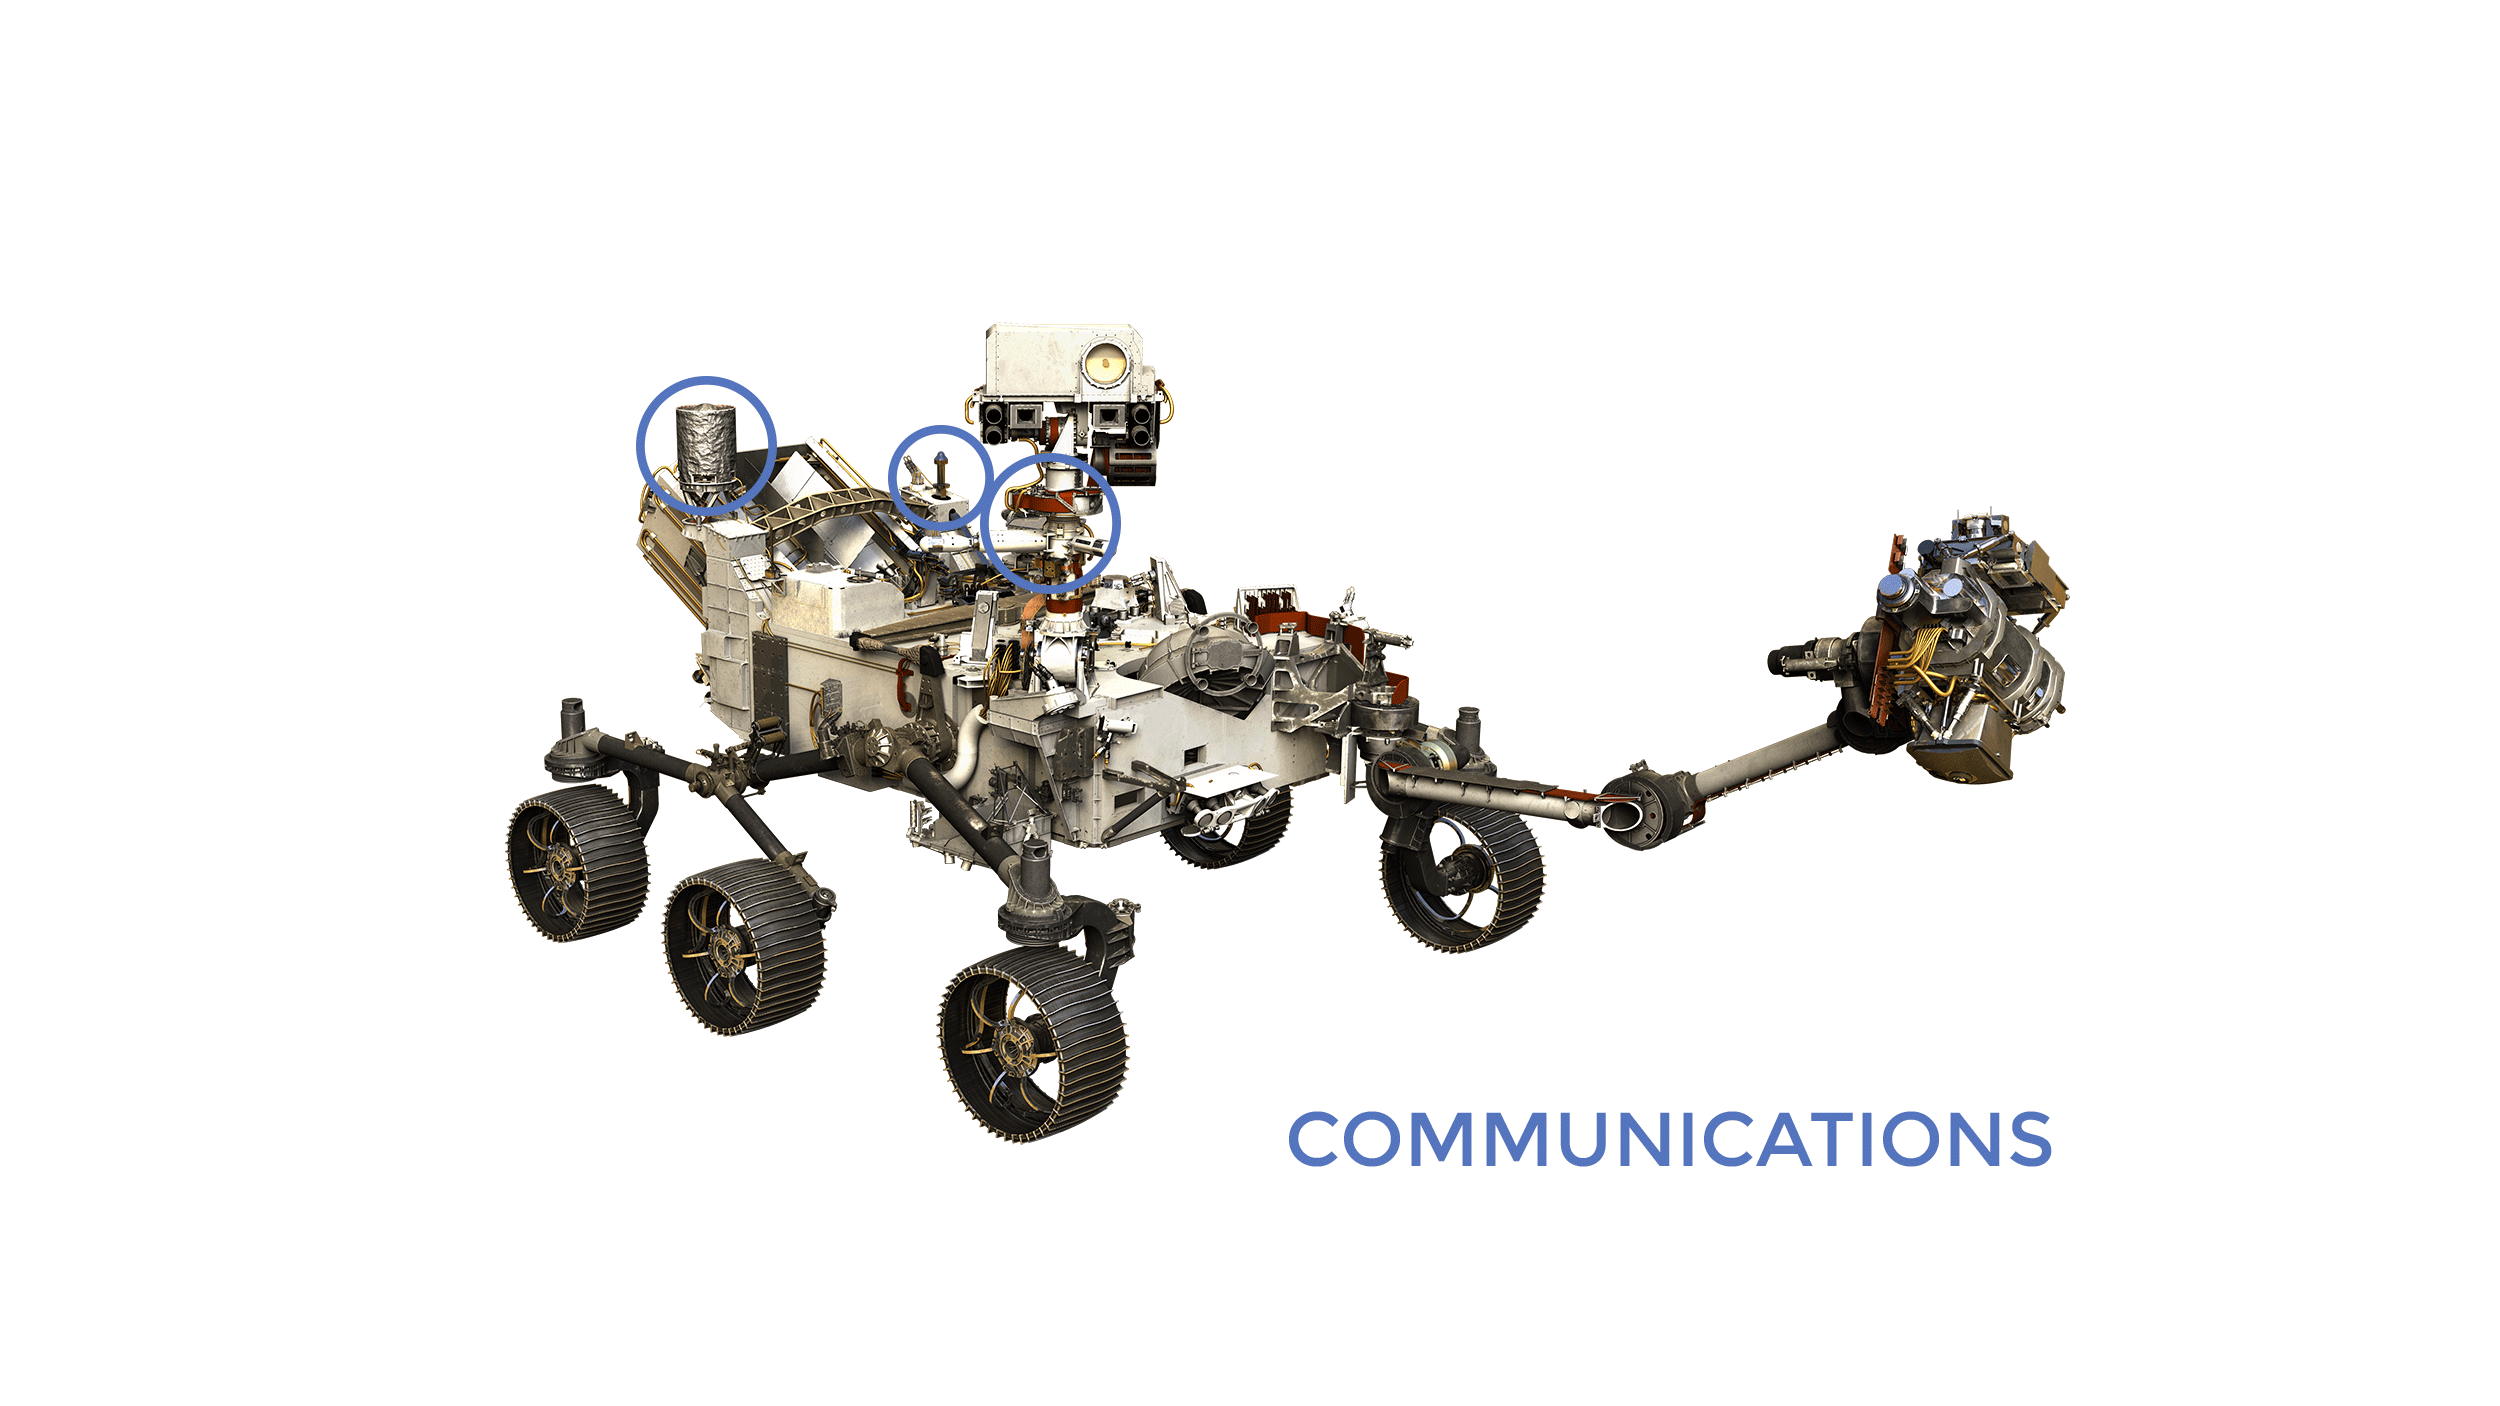 Mars 2020 Communication with animated labeling